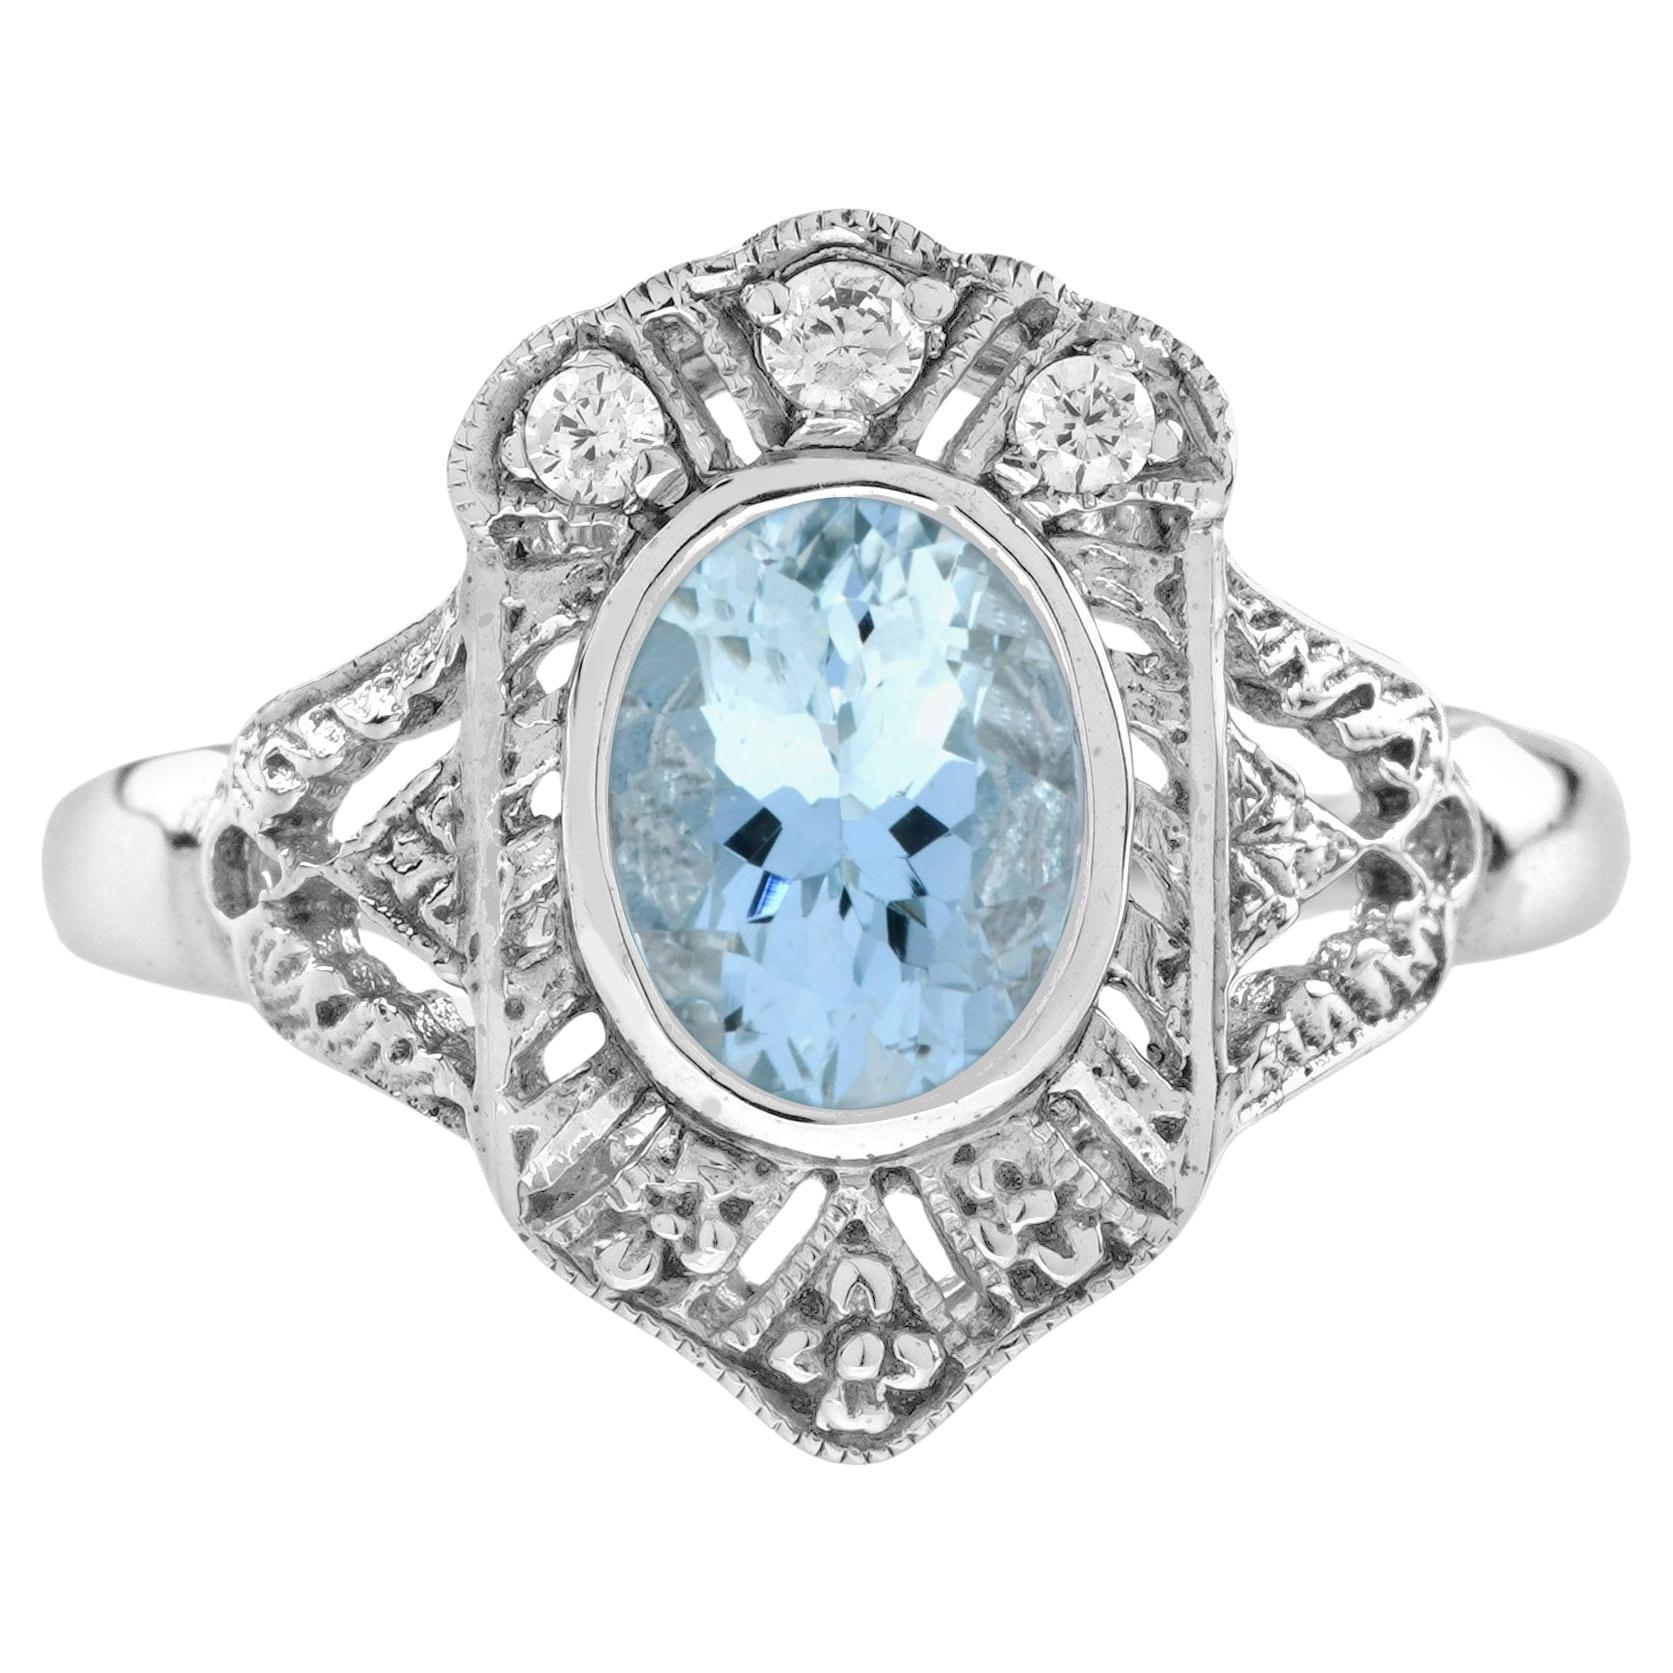 1.5 Ct. Aquamarine and Diamond Art Deco Style Engagement Ring in 14K White Gold